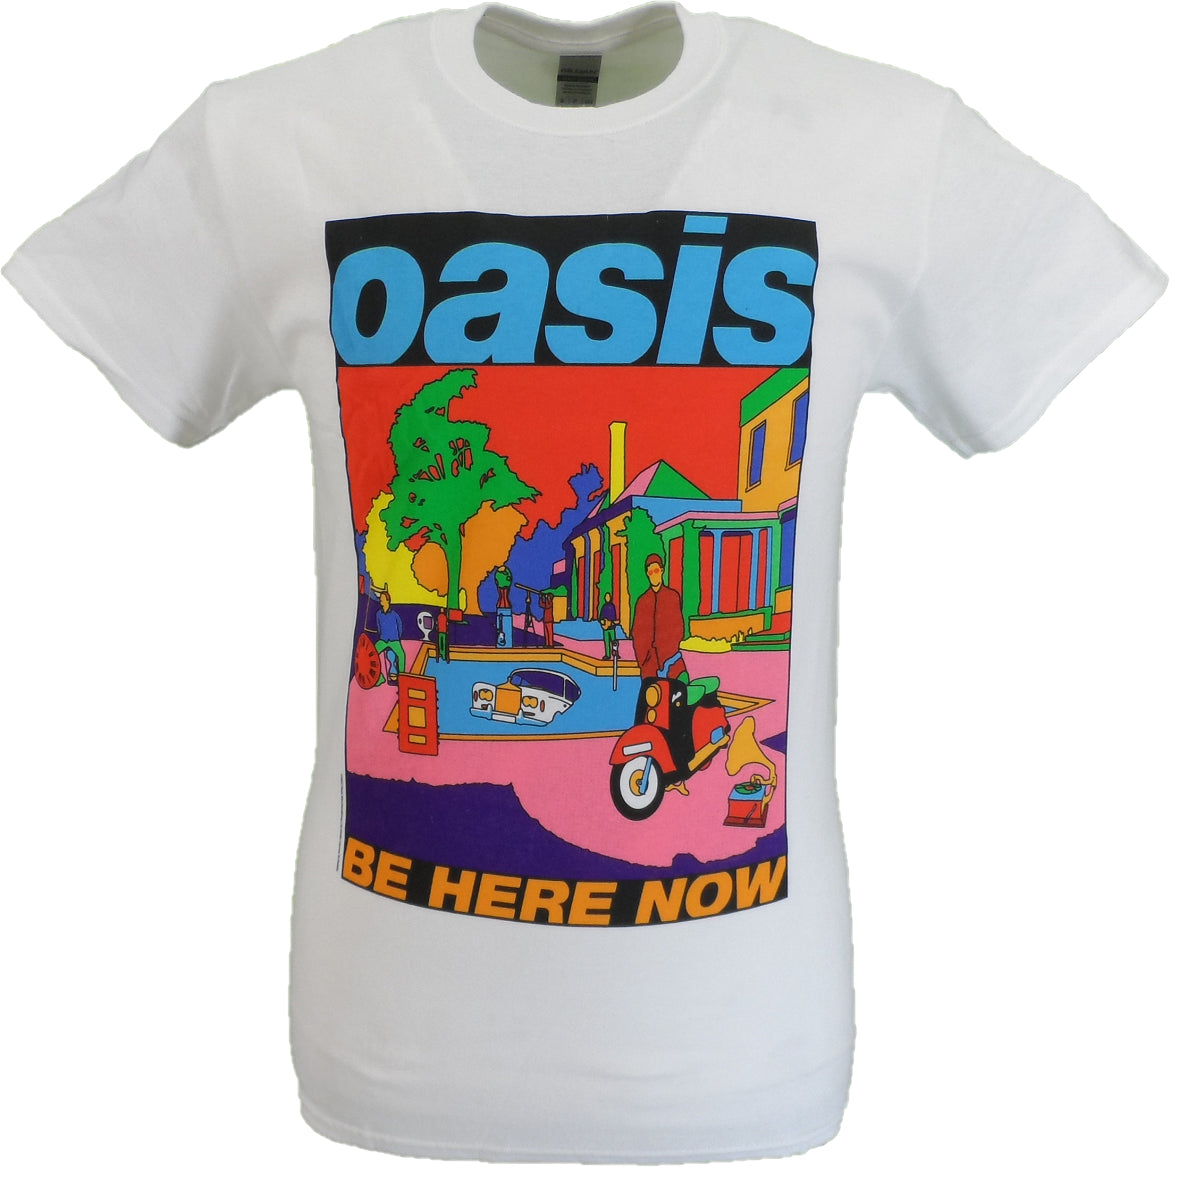 Oasis T Shirts, Clothing & Merchandise